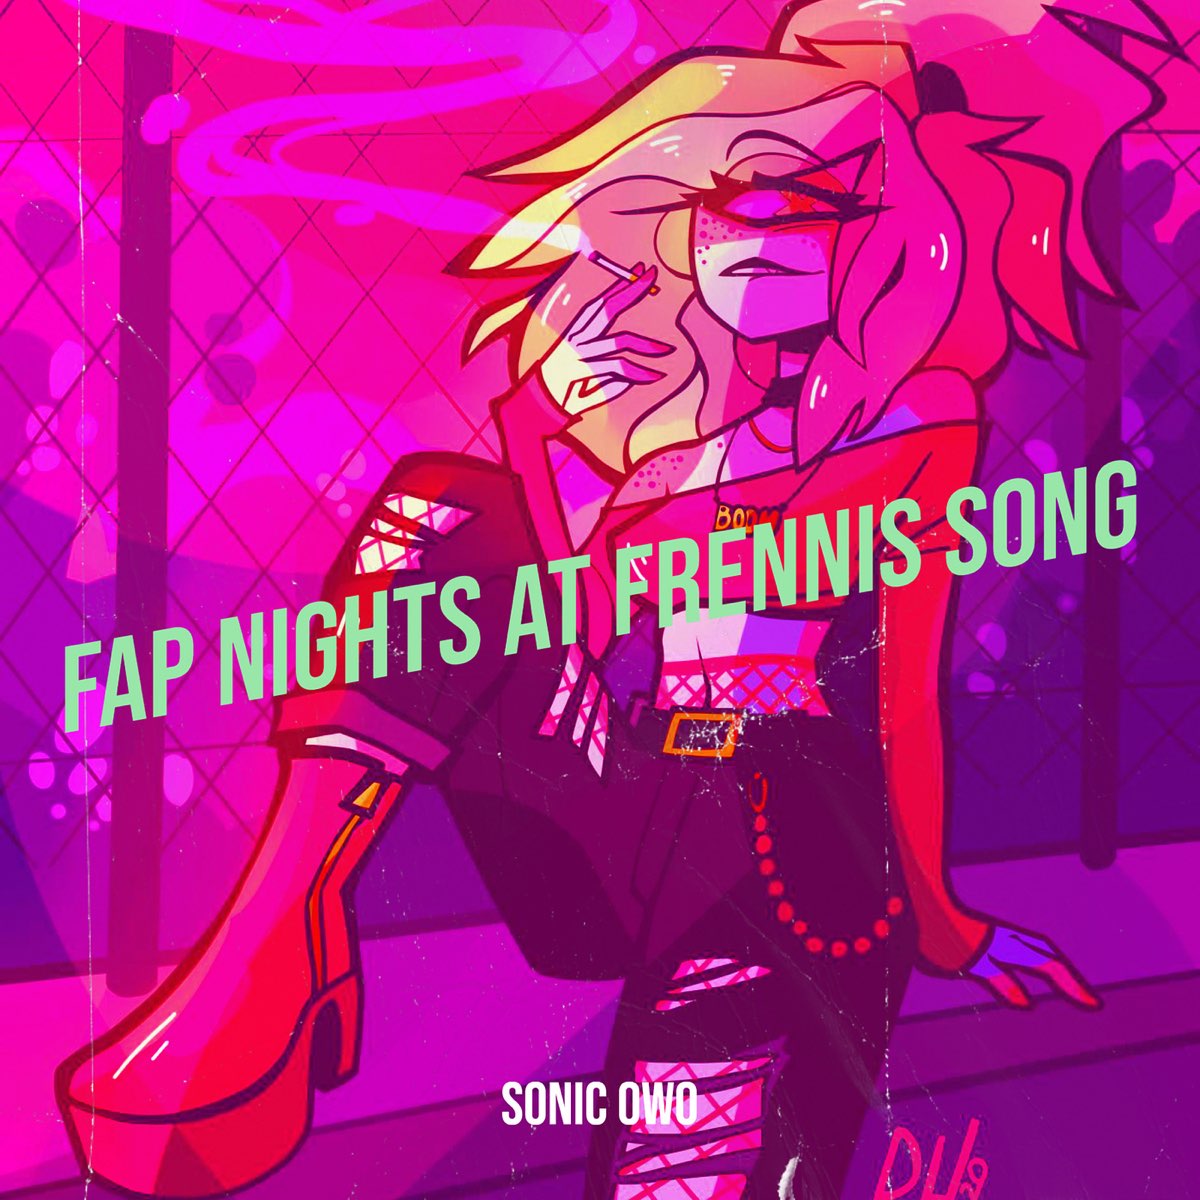 Fap night download